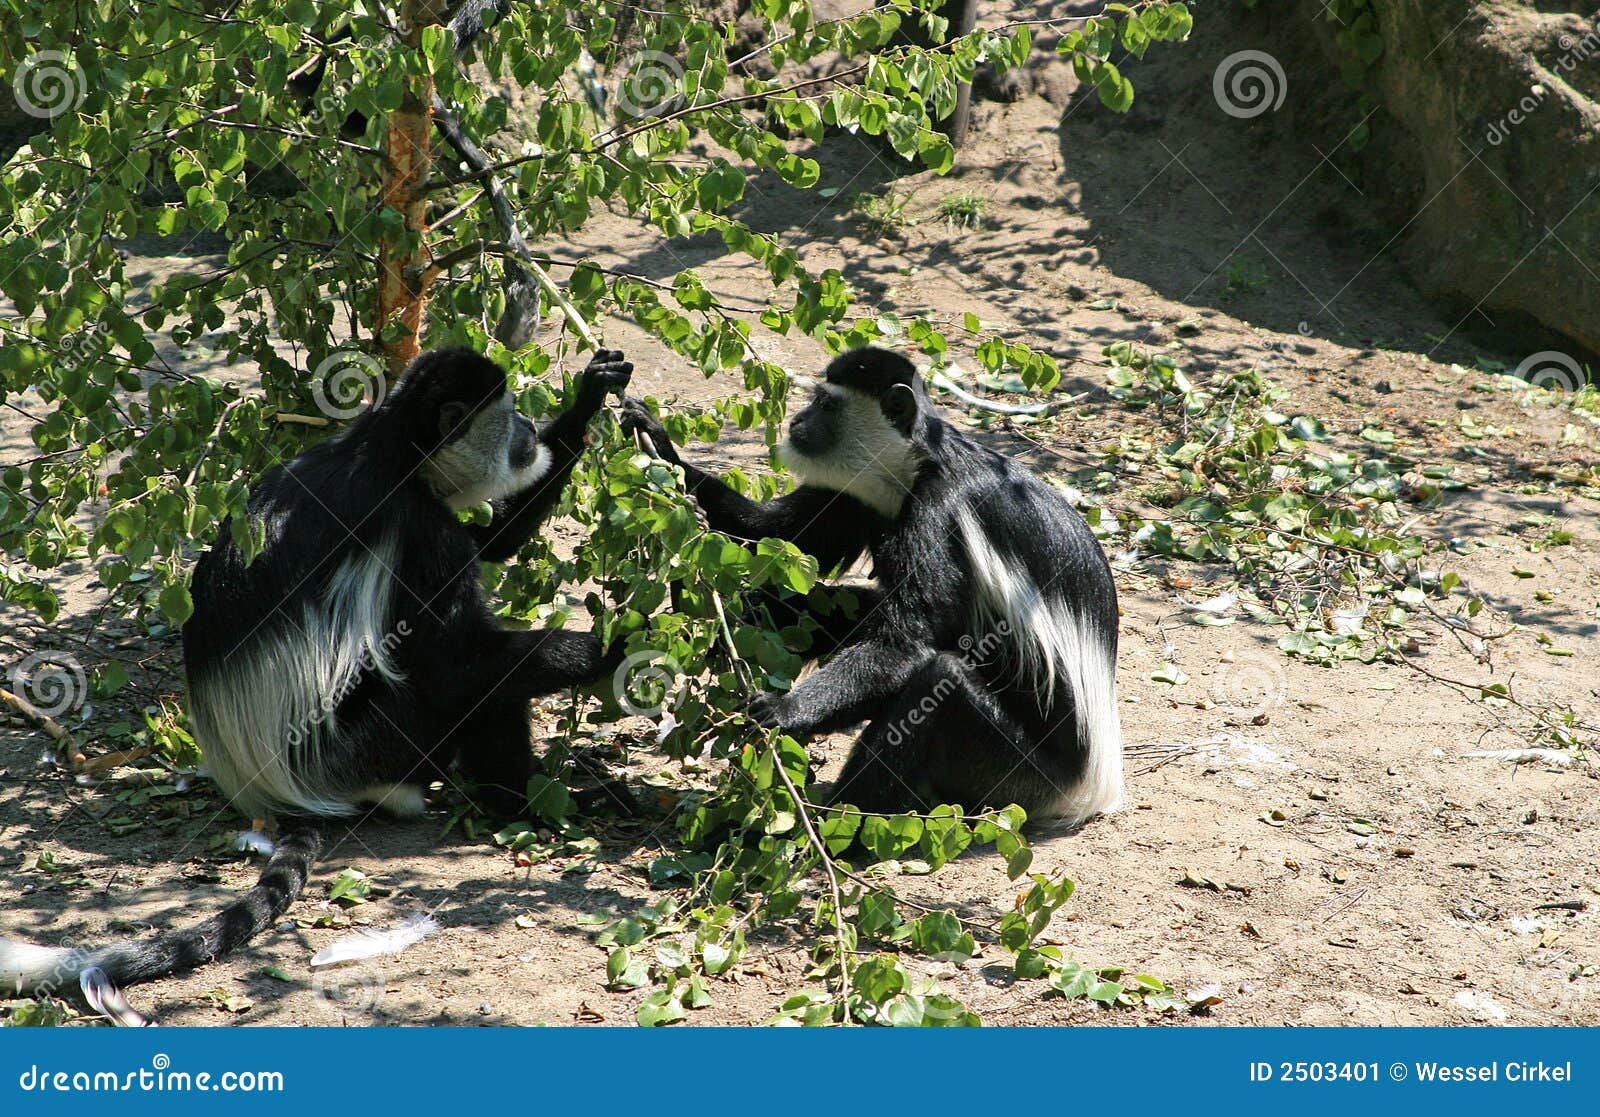 monkeys, named colobus guereza